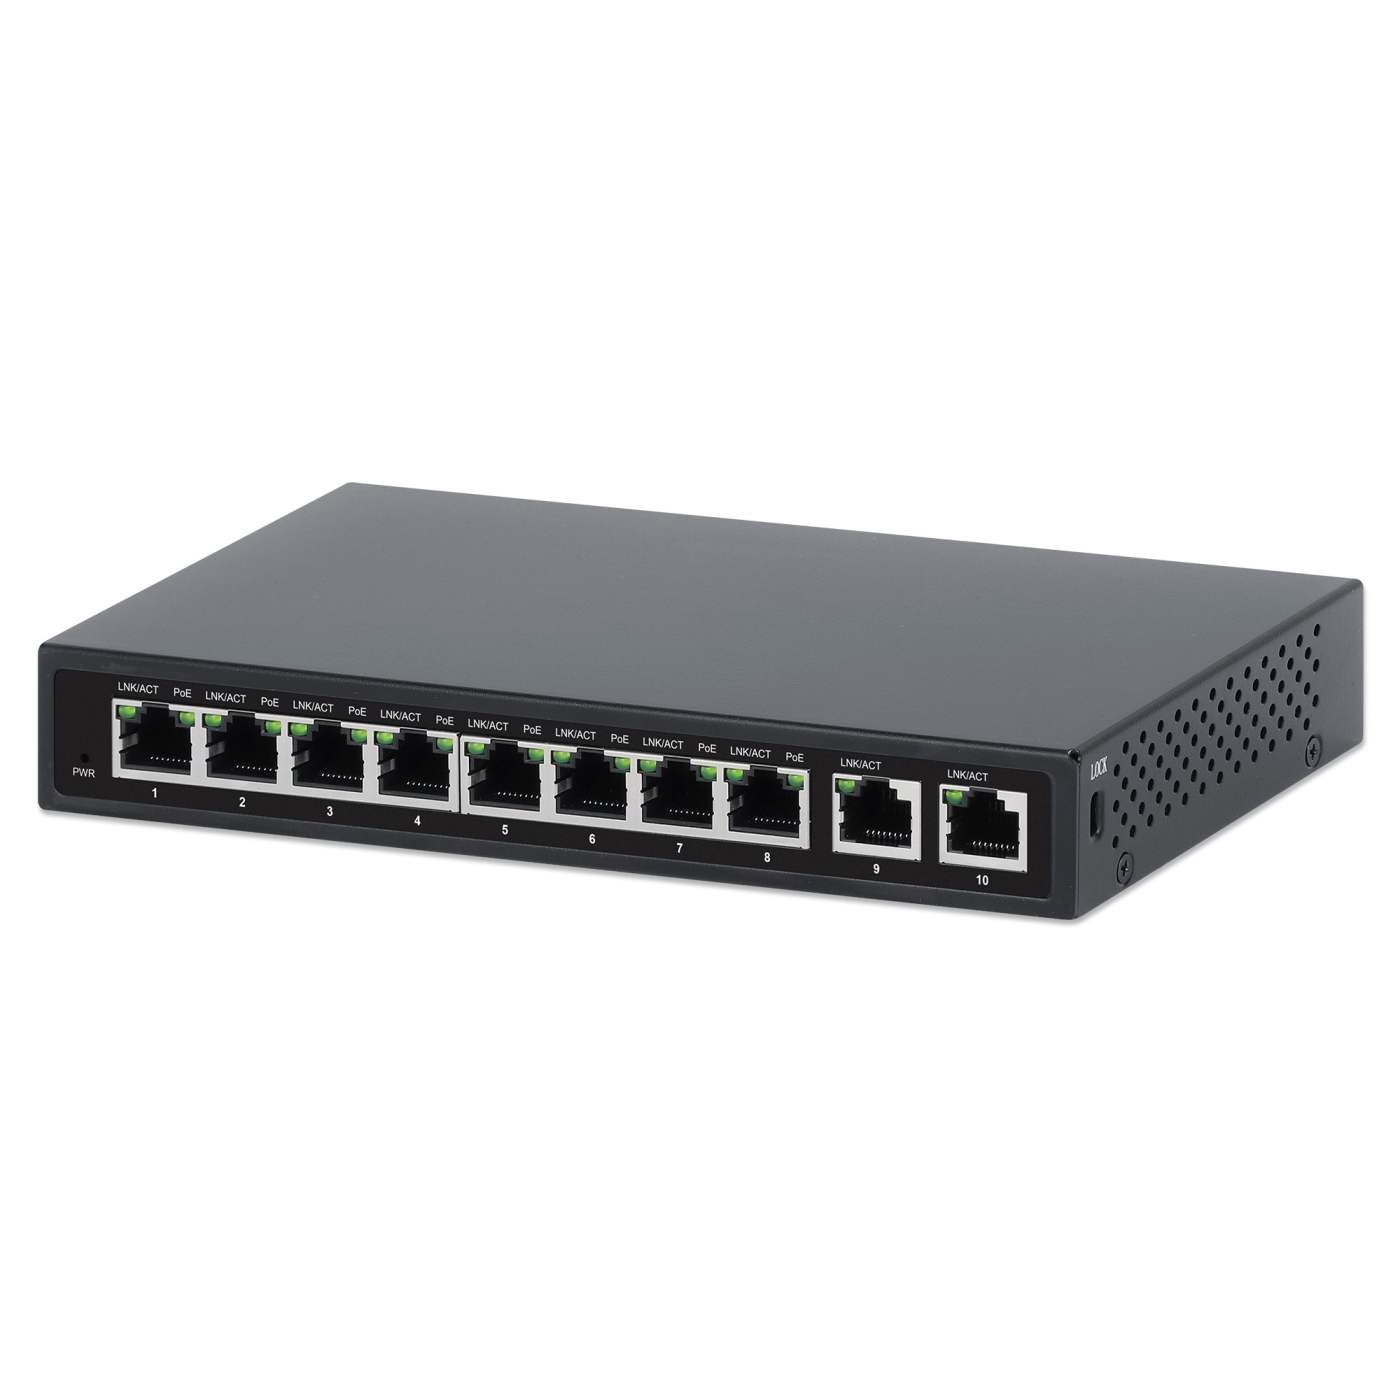 @T0056 AlliedTelesis AT-GS900/8PS Gigabit Ethernet PoE+ Switch RJ45 4ポートPoE対応 ギガビットイーサPoE+スイッチ